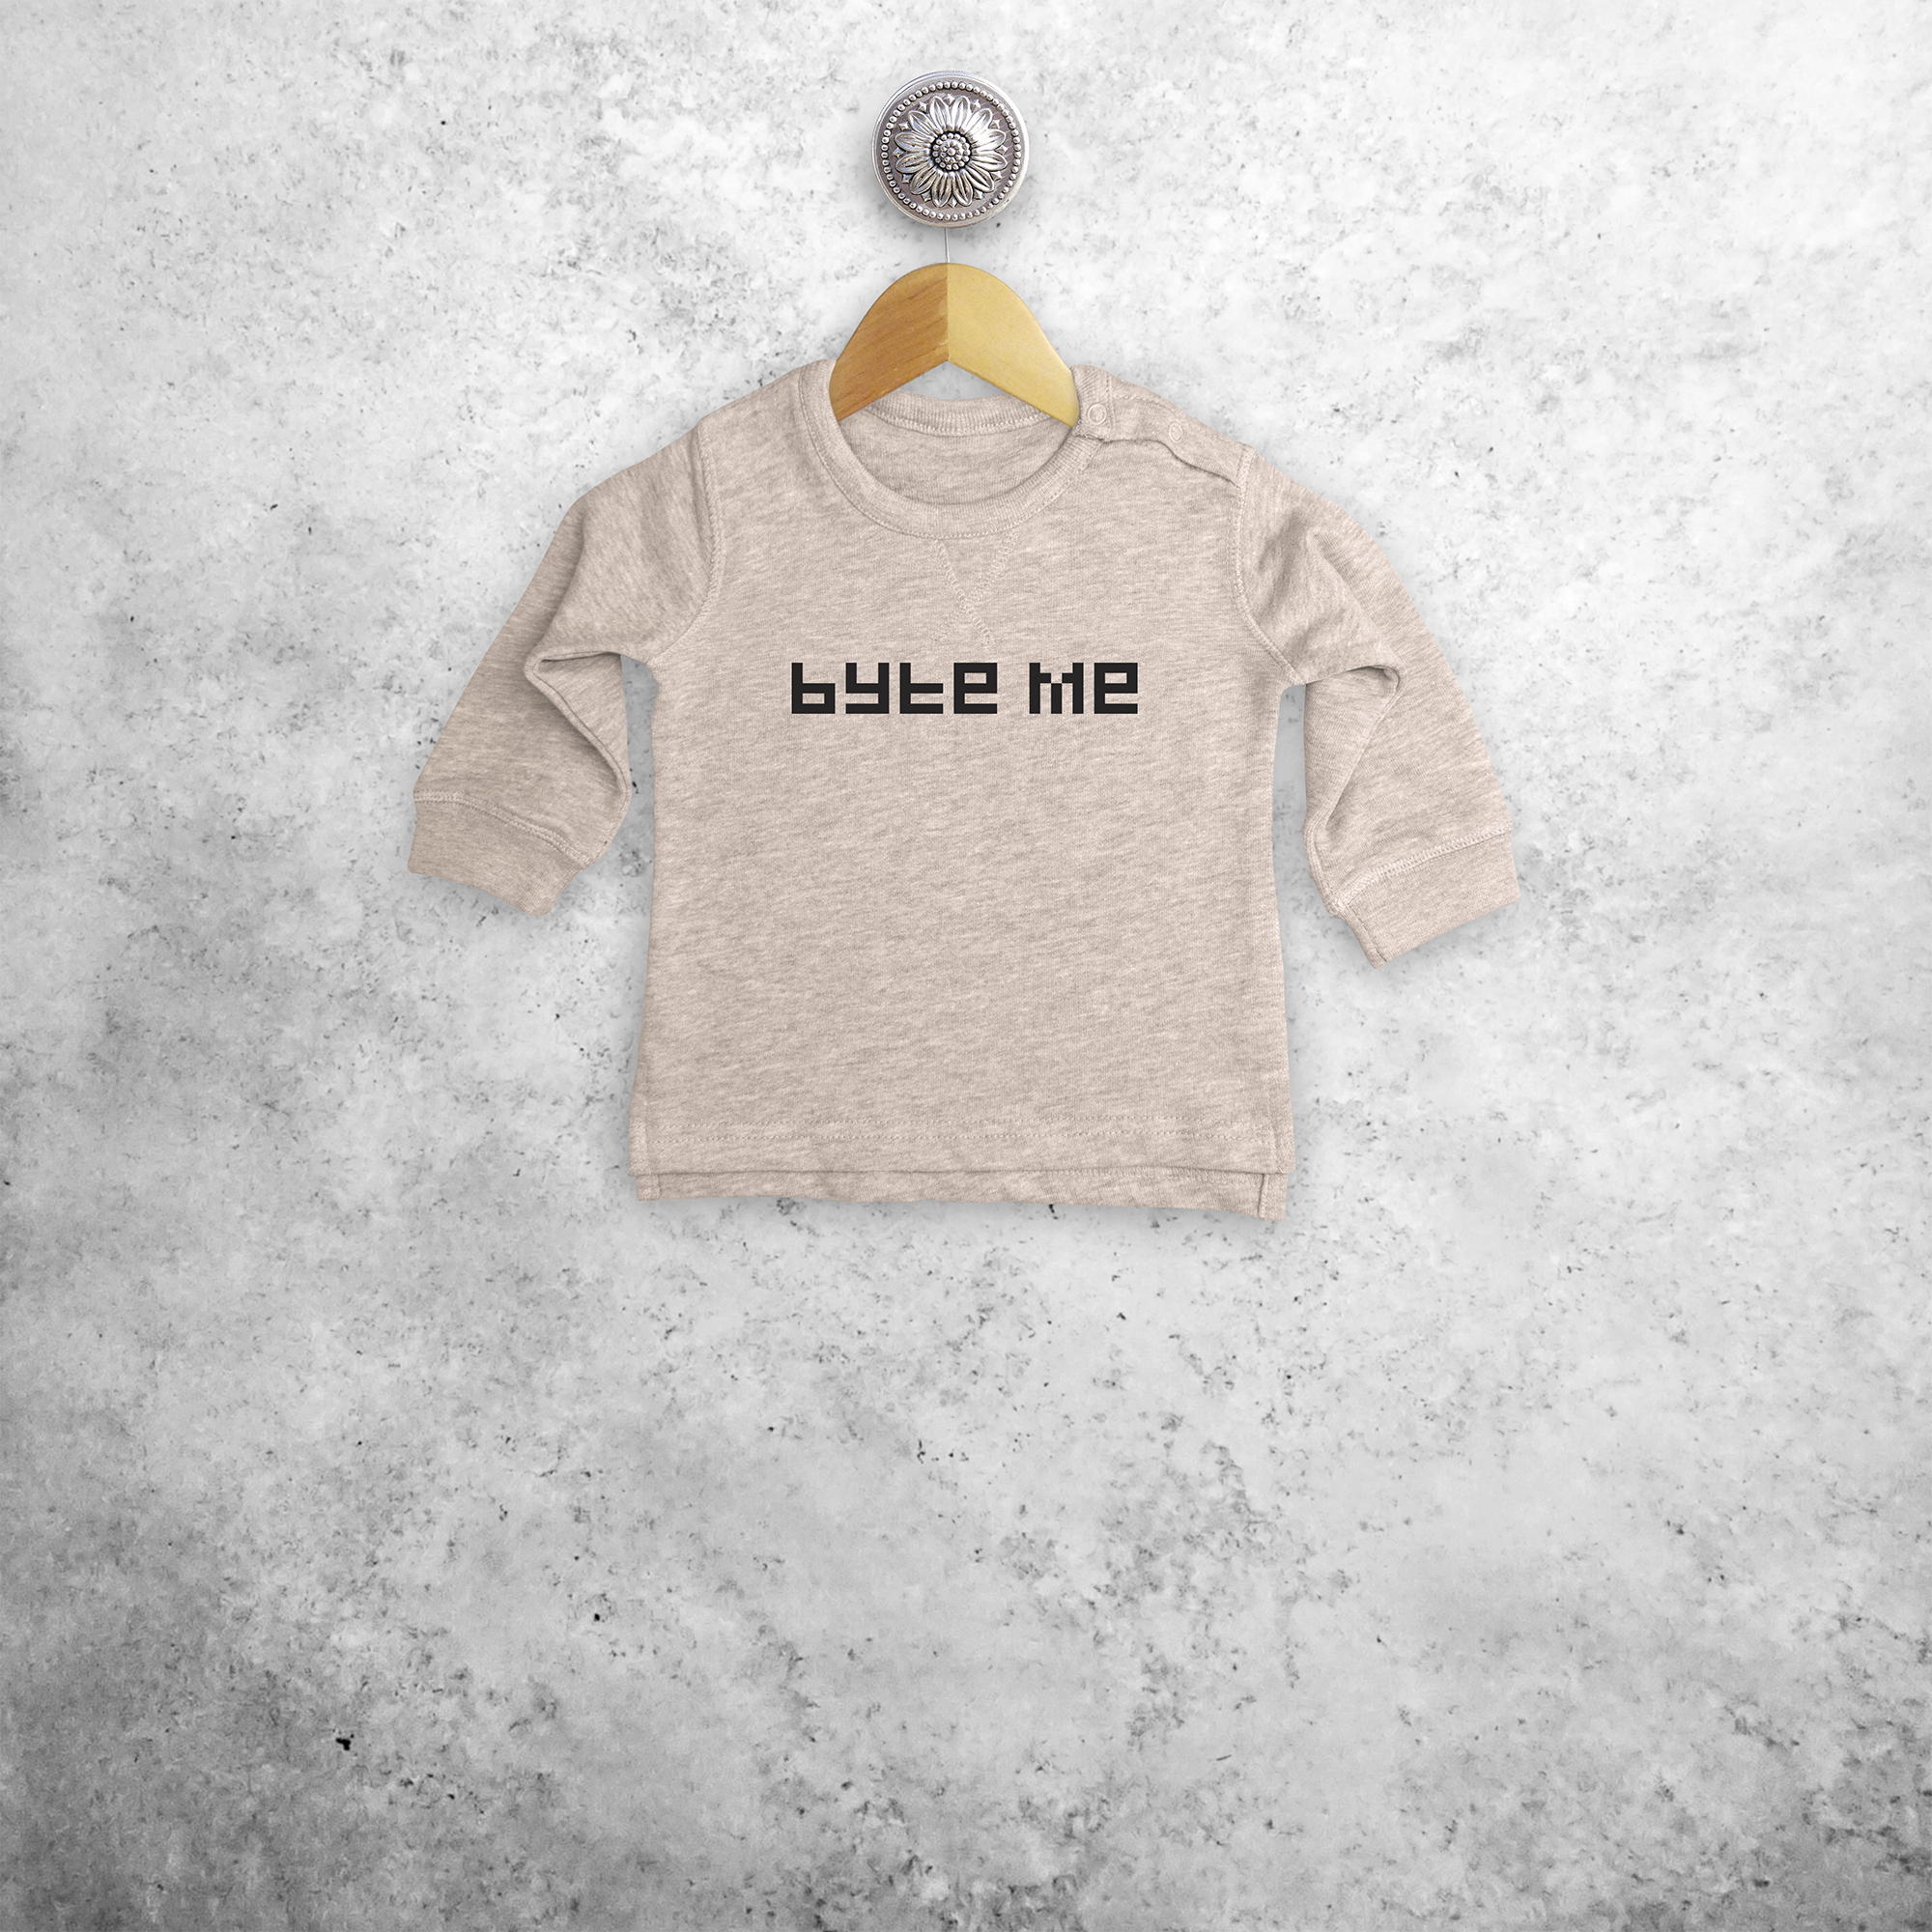 'Byte me' baby sweater